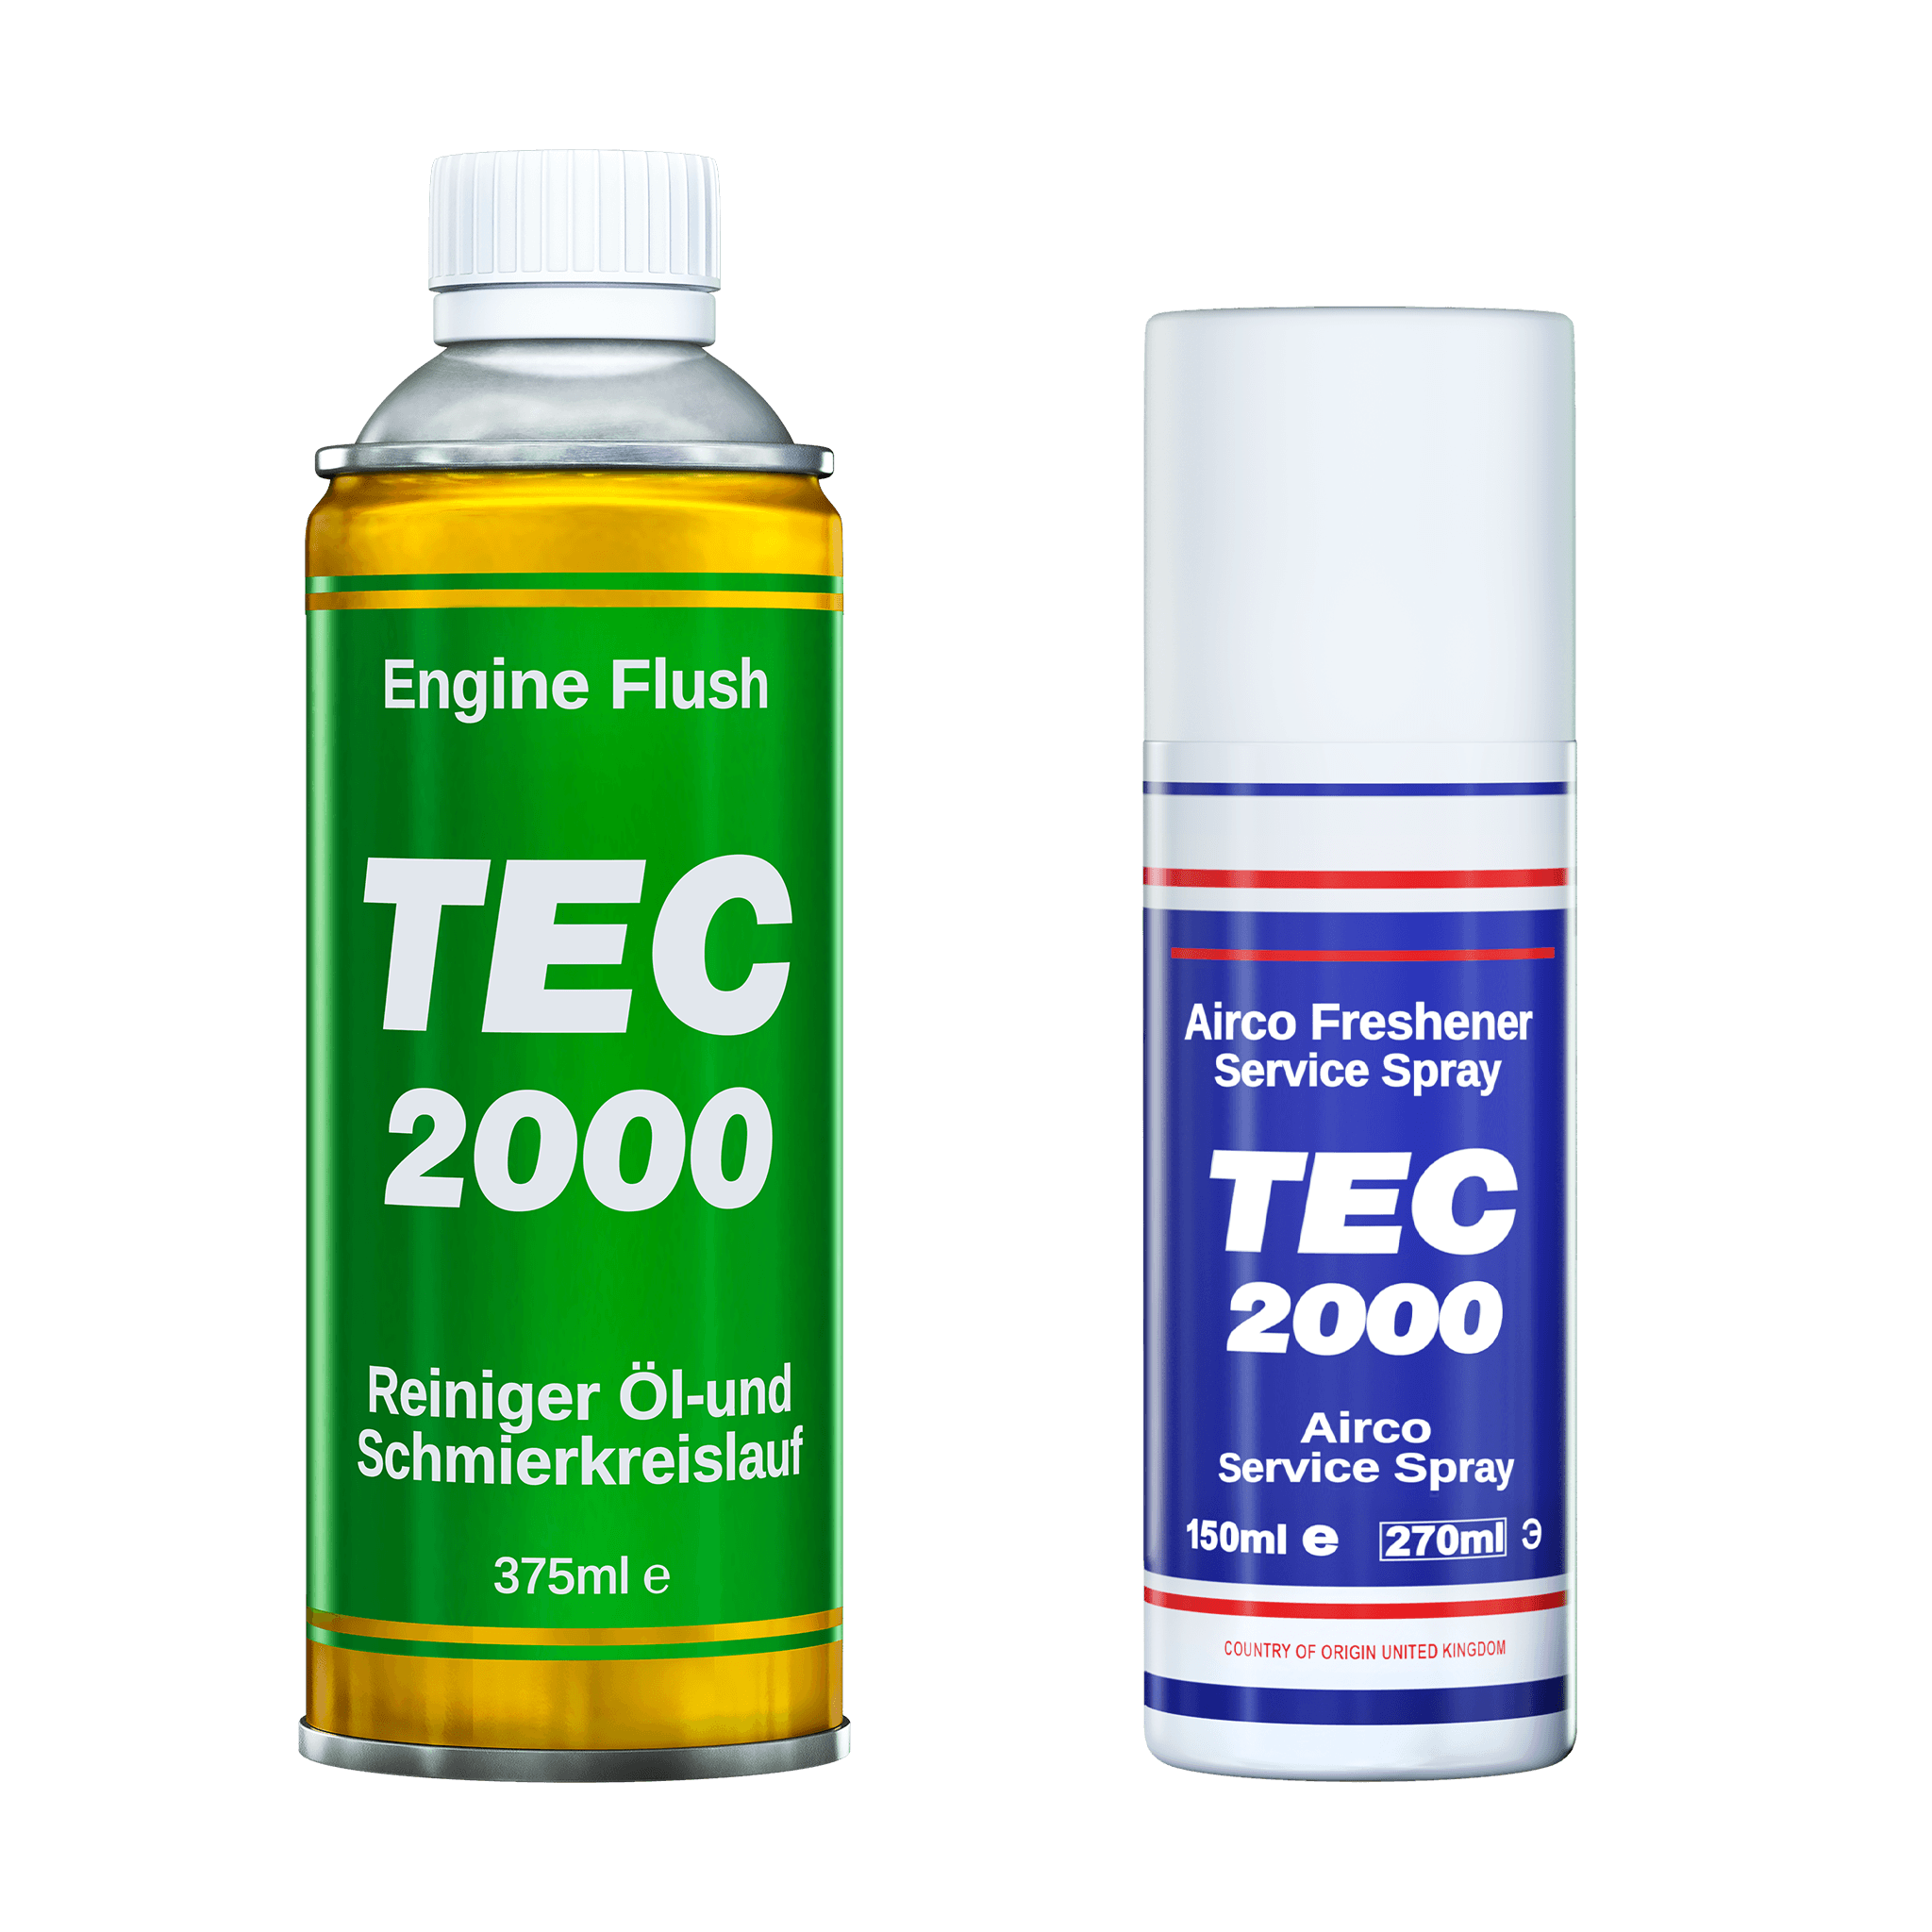 Zestaw TEC 2000: Engine Flush i Airco Fresher Service Spray